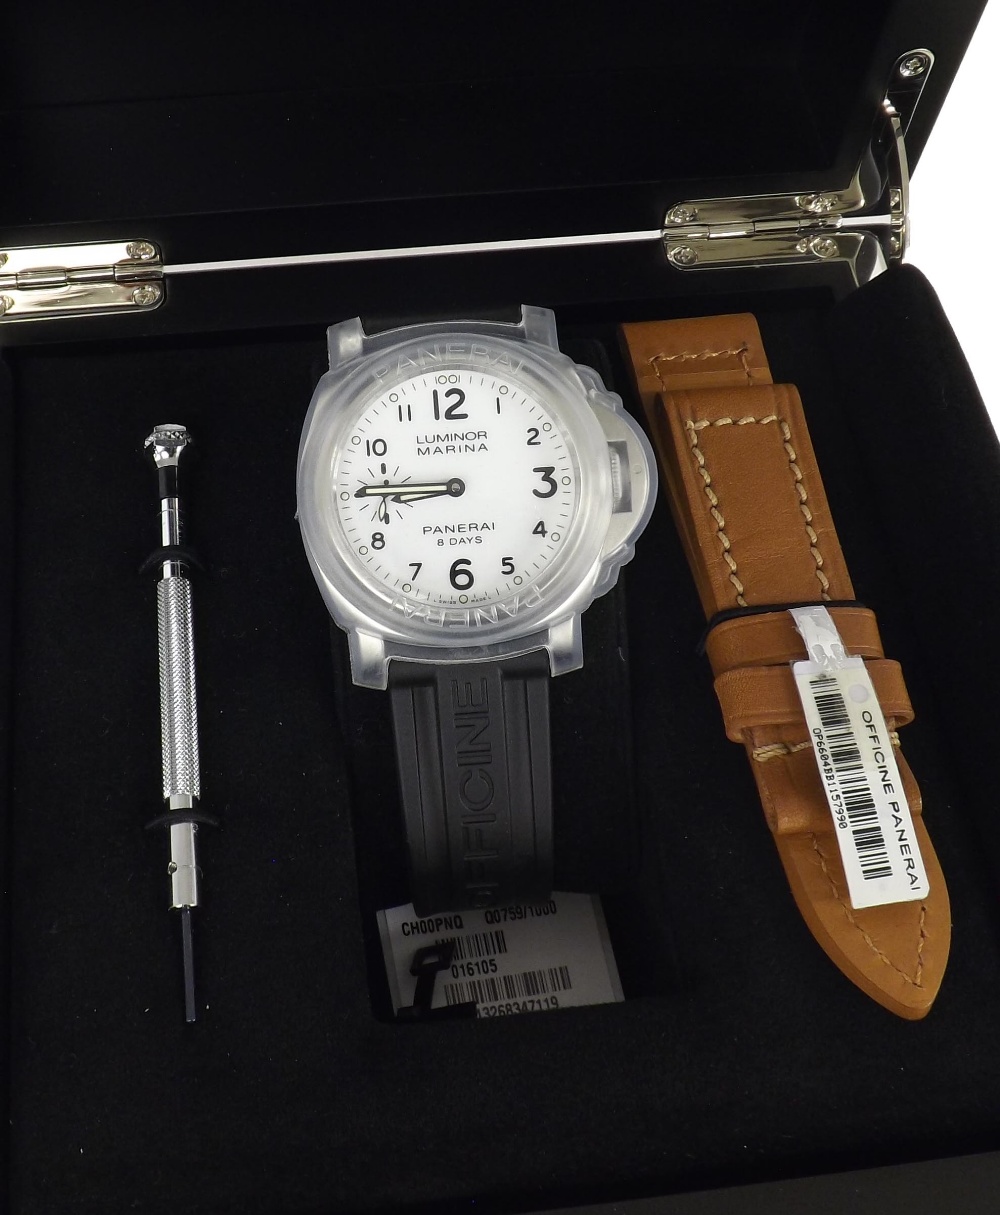 Panerai Luminor Marina 8 Days stainless steel gentleman's wristwatch, ref PAM00563, limited - Image 2 of 4